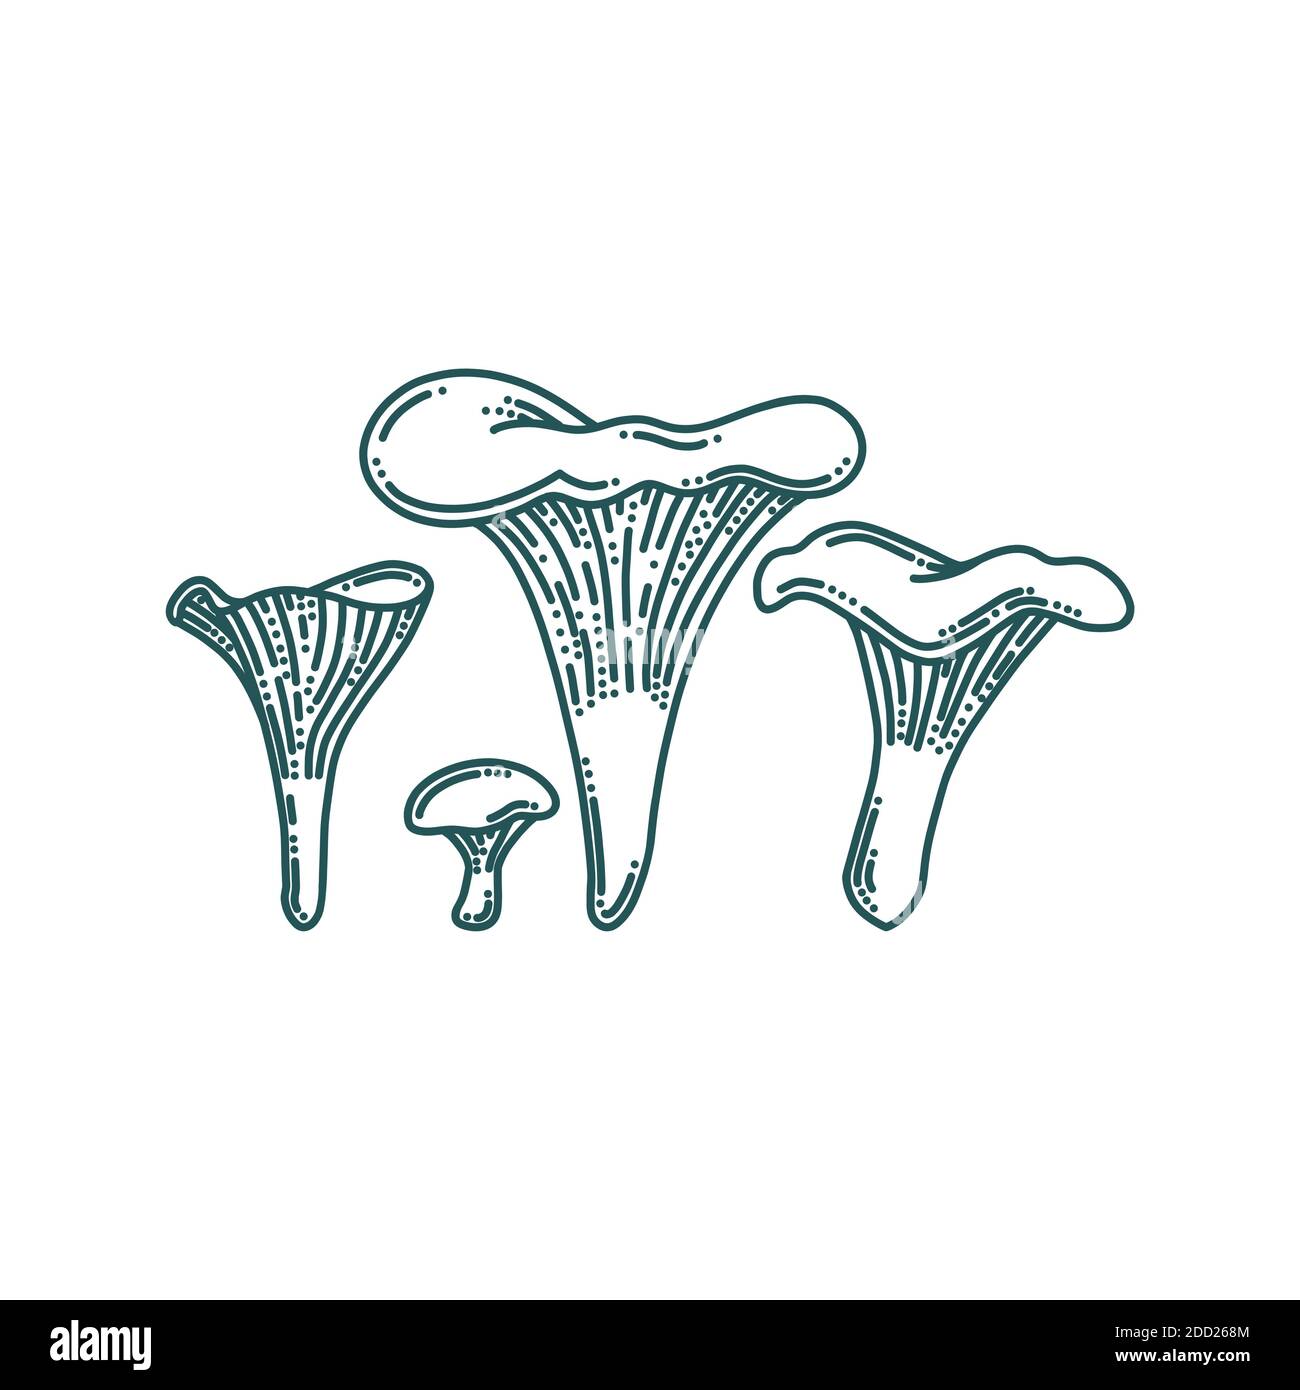 Pfifferlinge Pilze im Doodle-Stil. Wald- oder Bauernpilze unterschiedlicher Größe. Doodle Vektorgrafik Stock Vektor